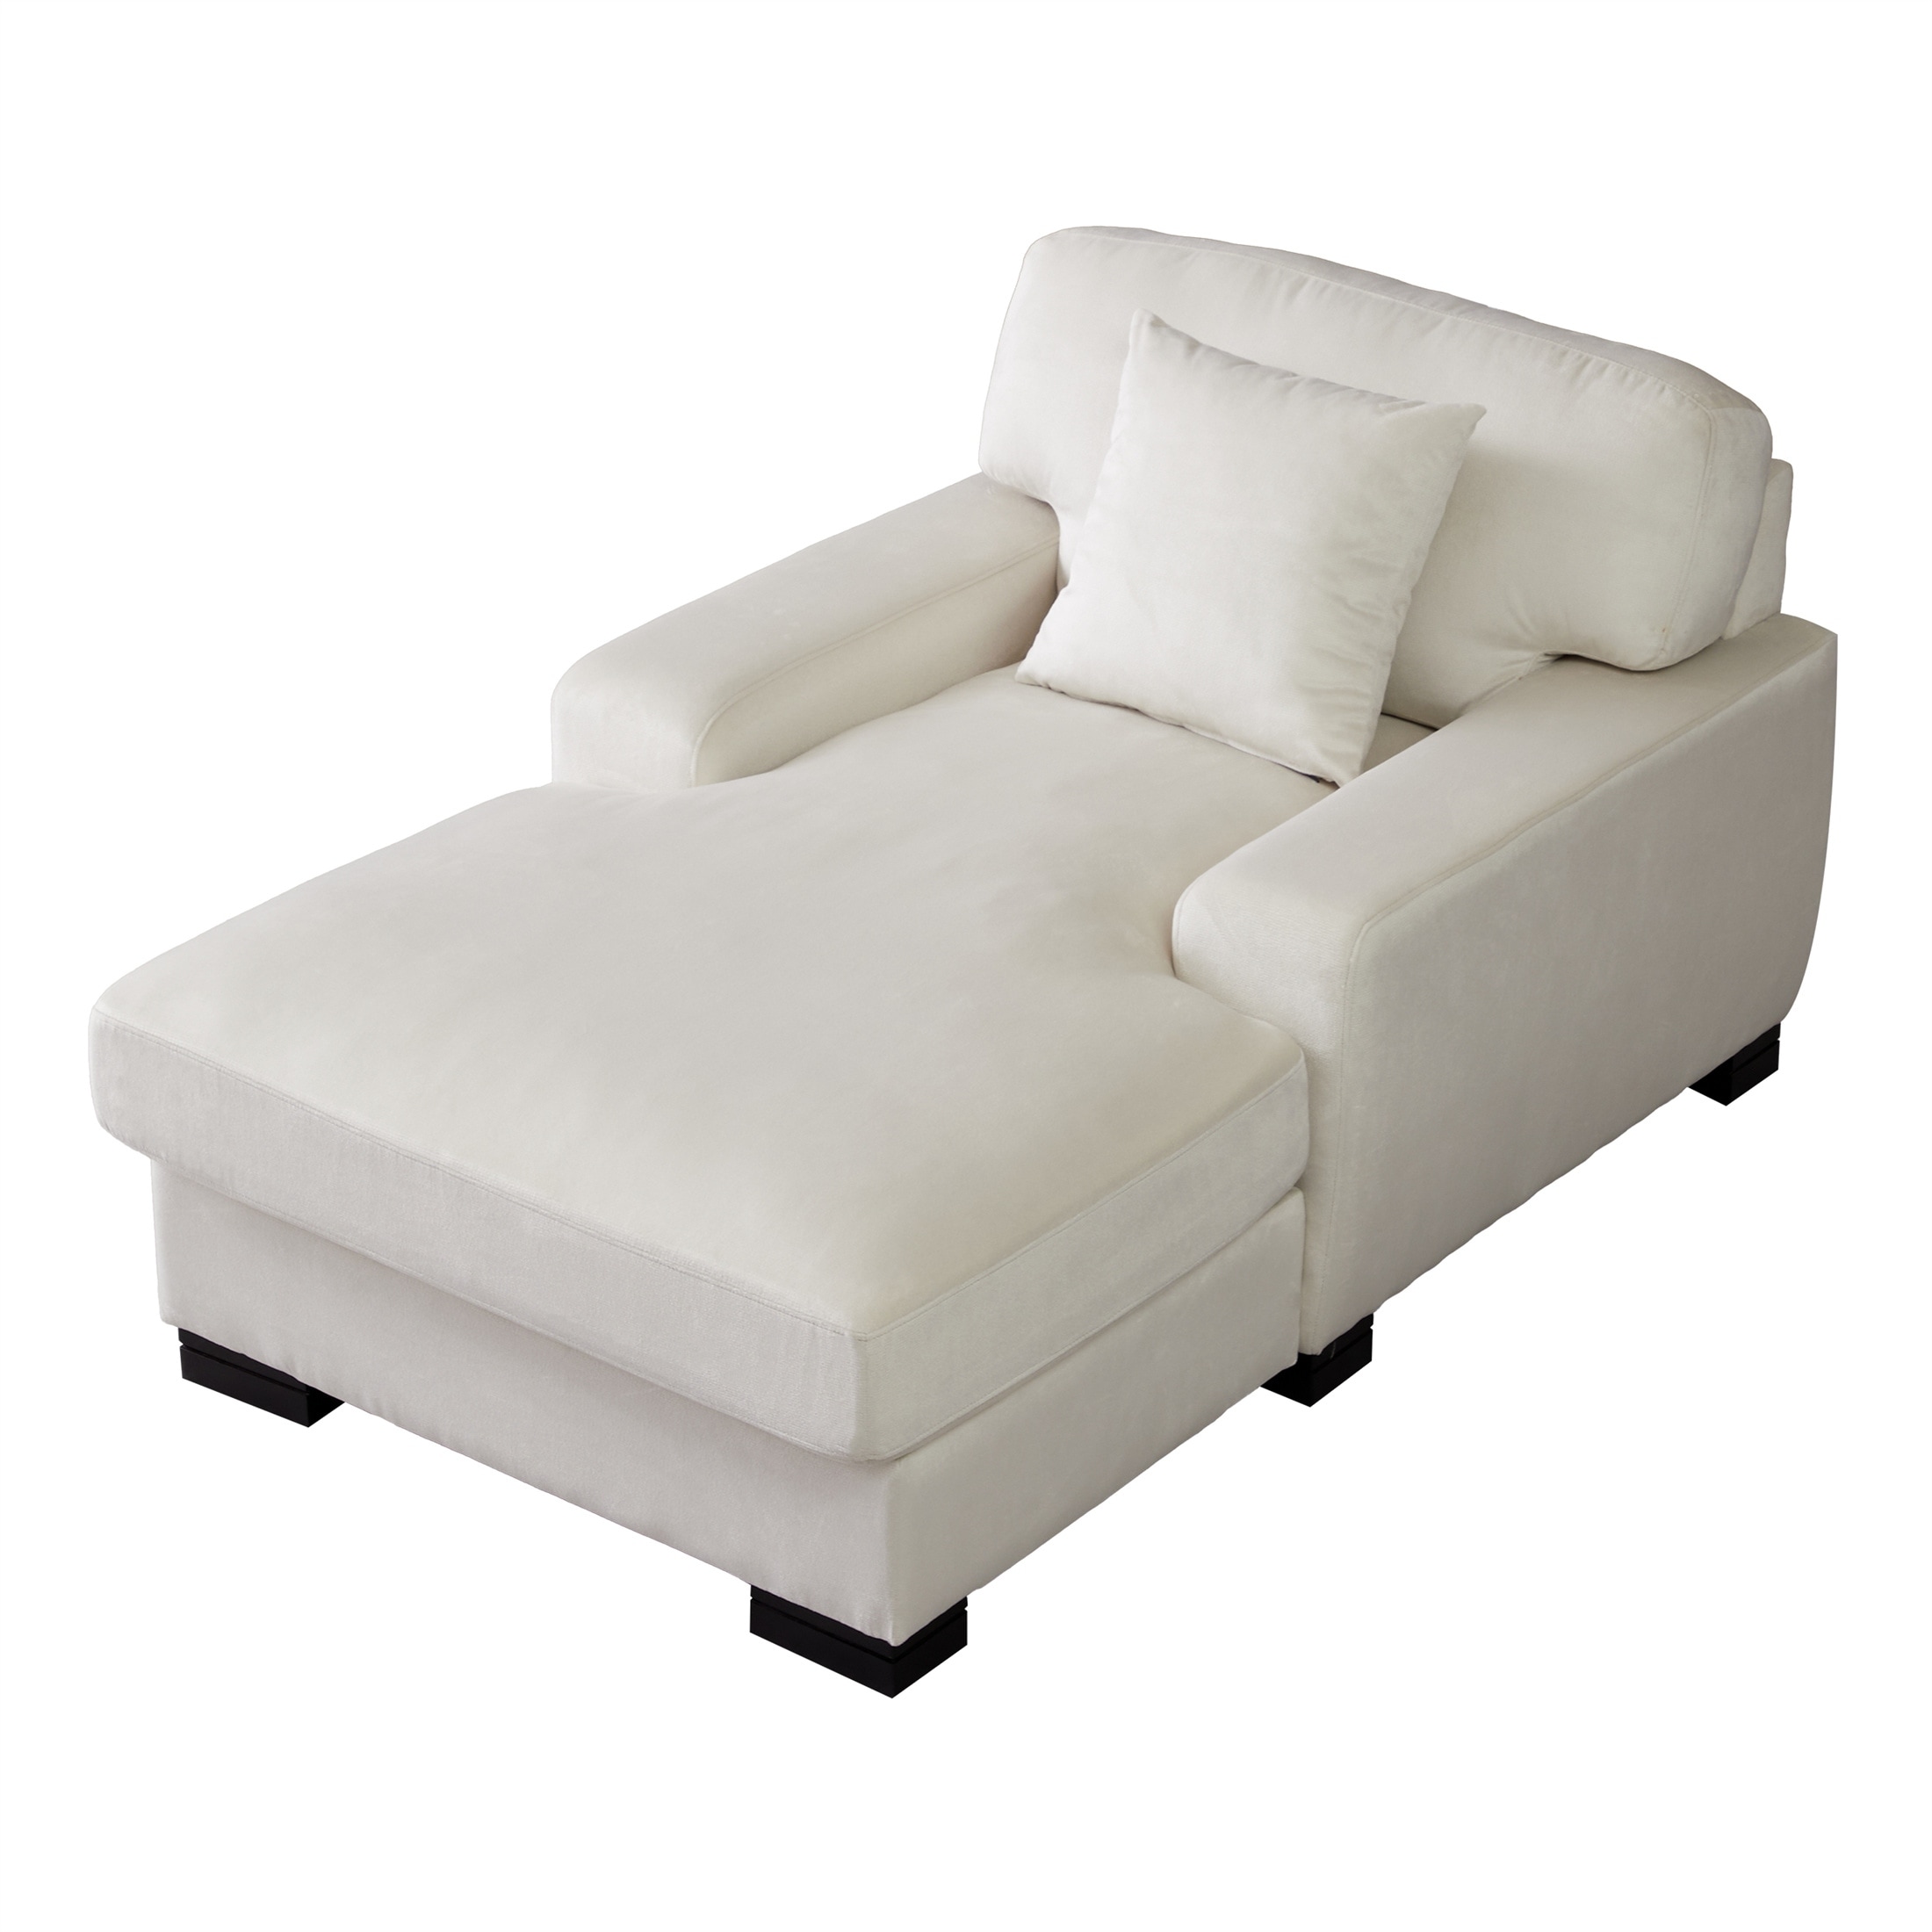 Modern Indoor Oversized Comfort Linen Chaise Lounger